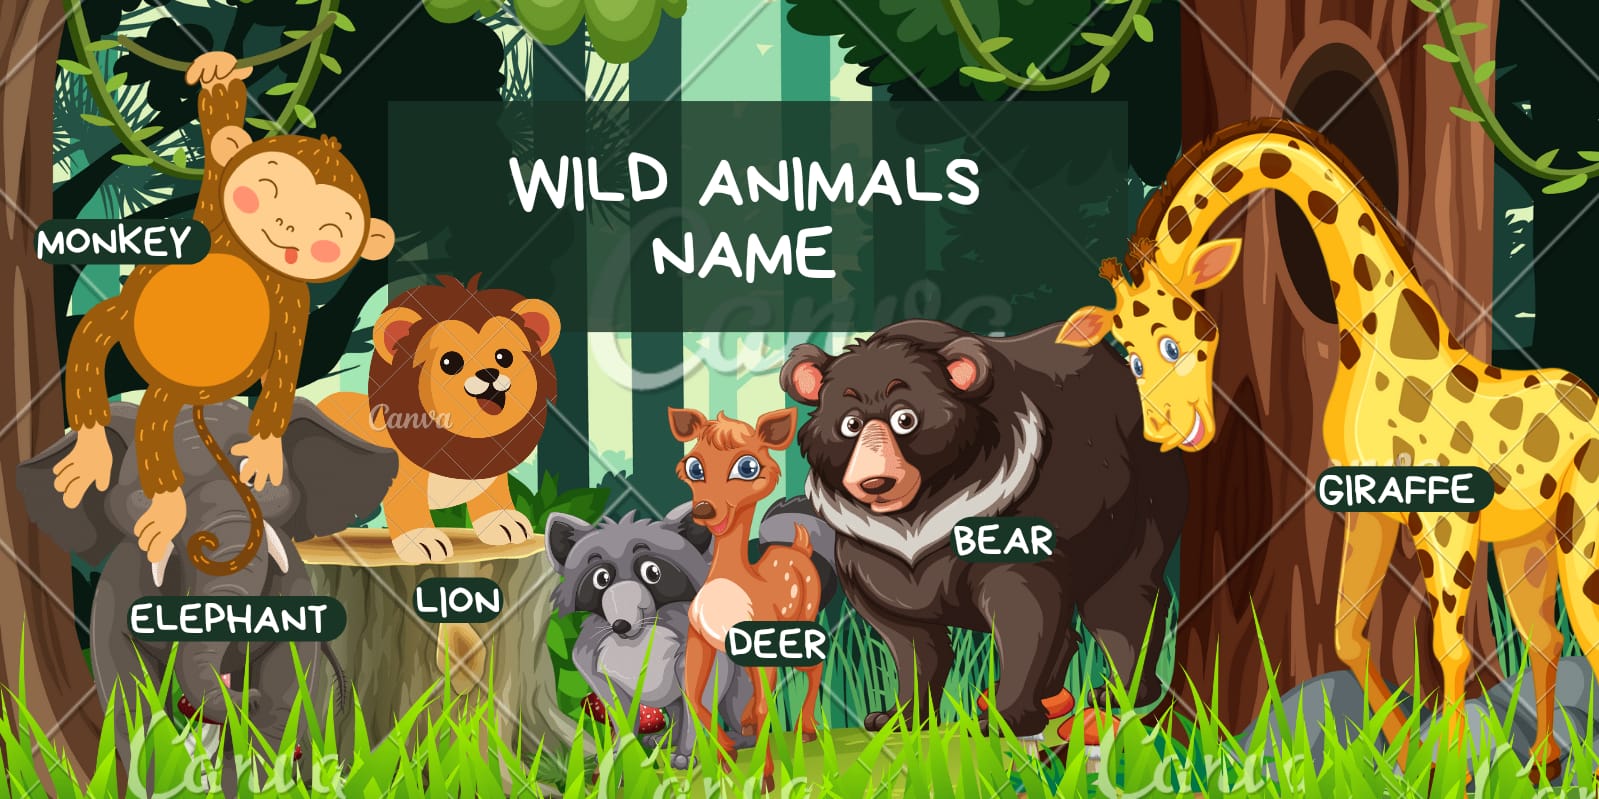 Wild animals name